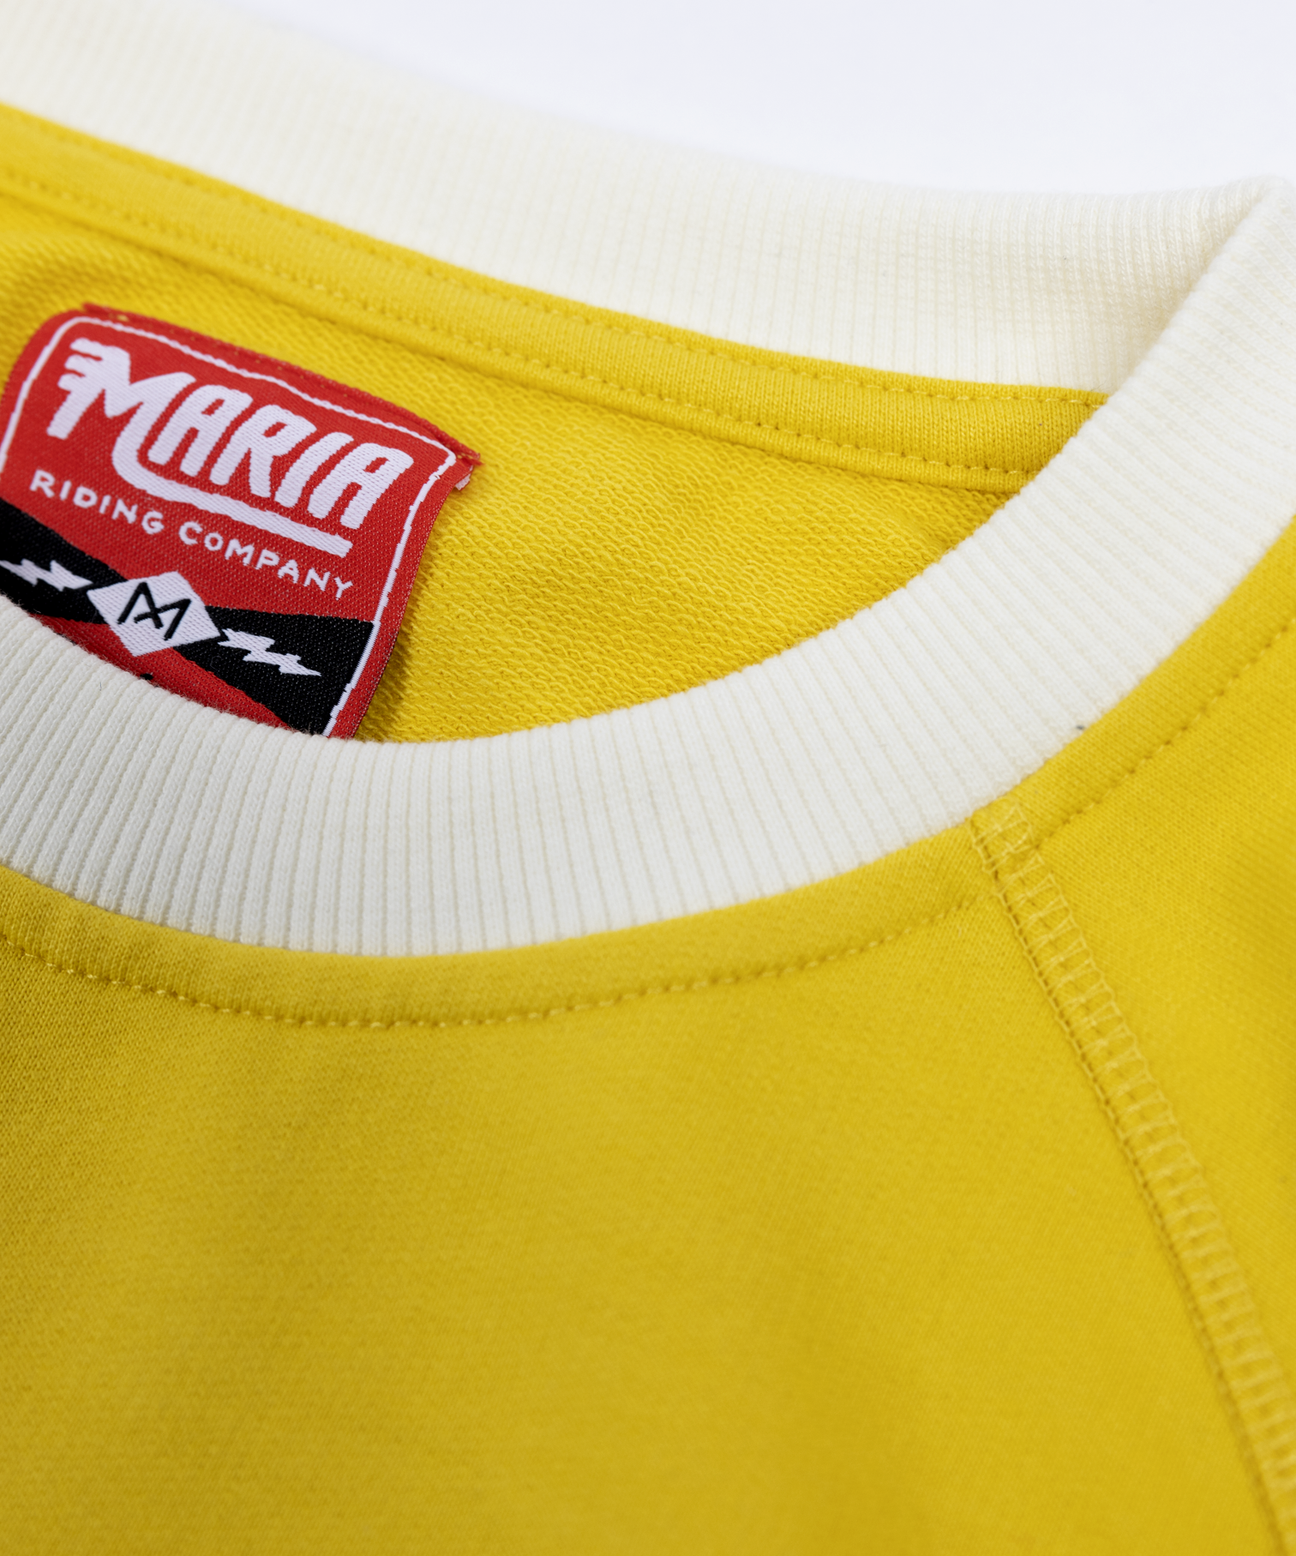 mens-yellow-Legion-sweatshirt-5.png